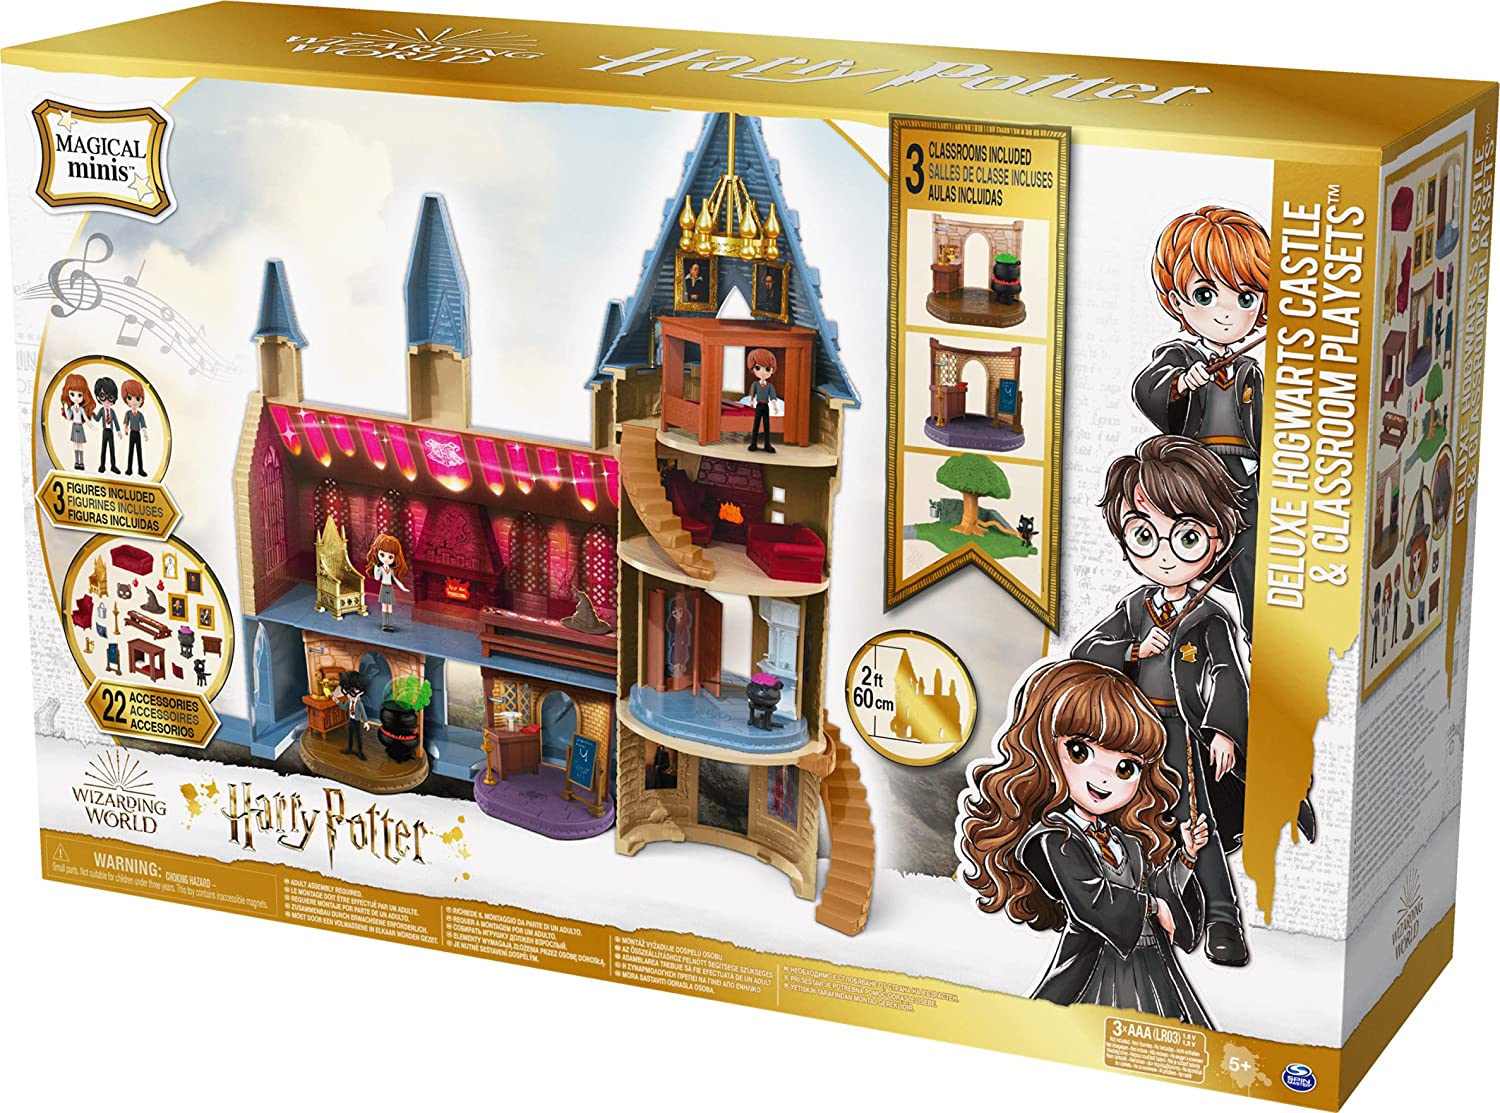 Set – 3 Figuras Harry Potter